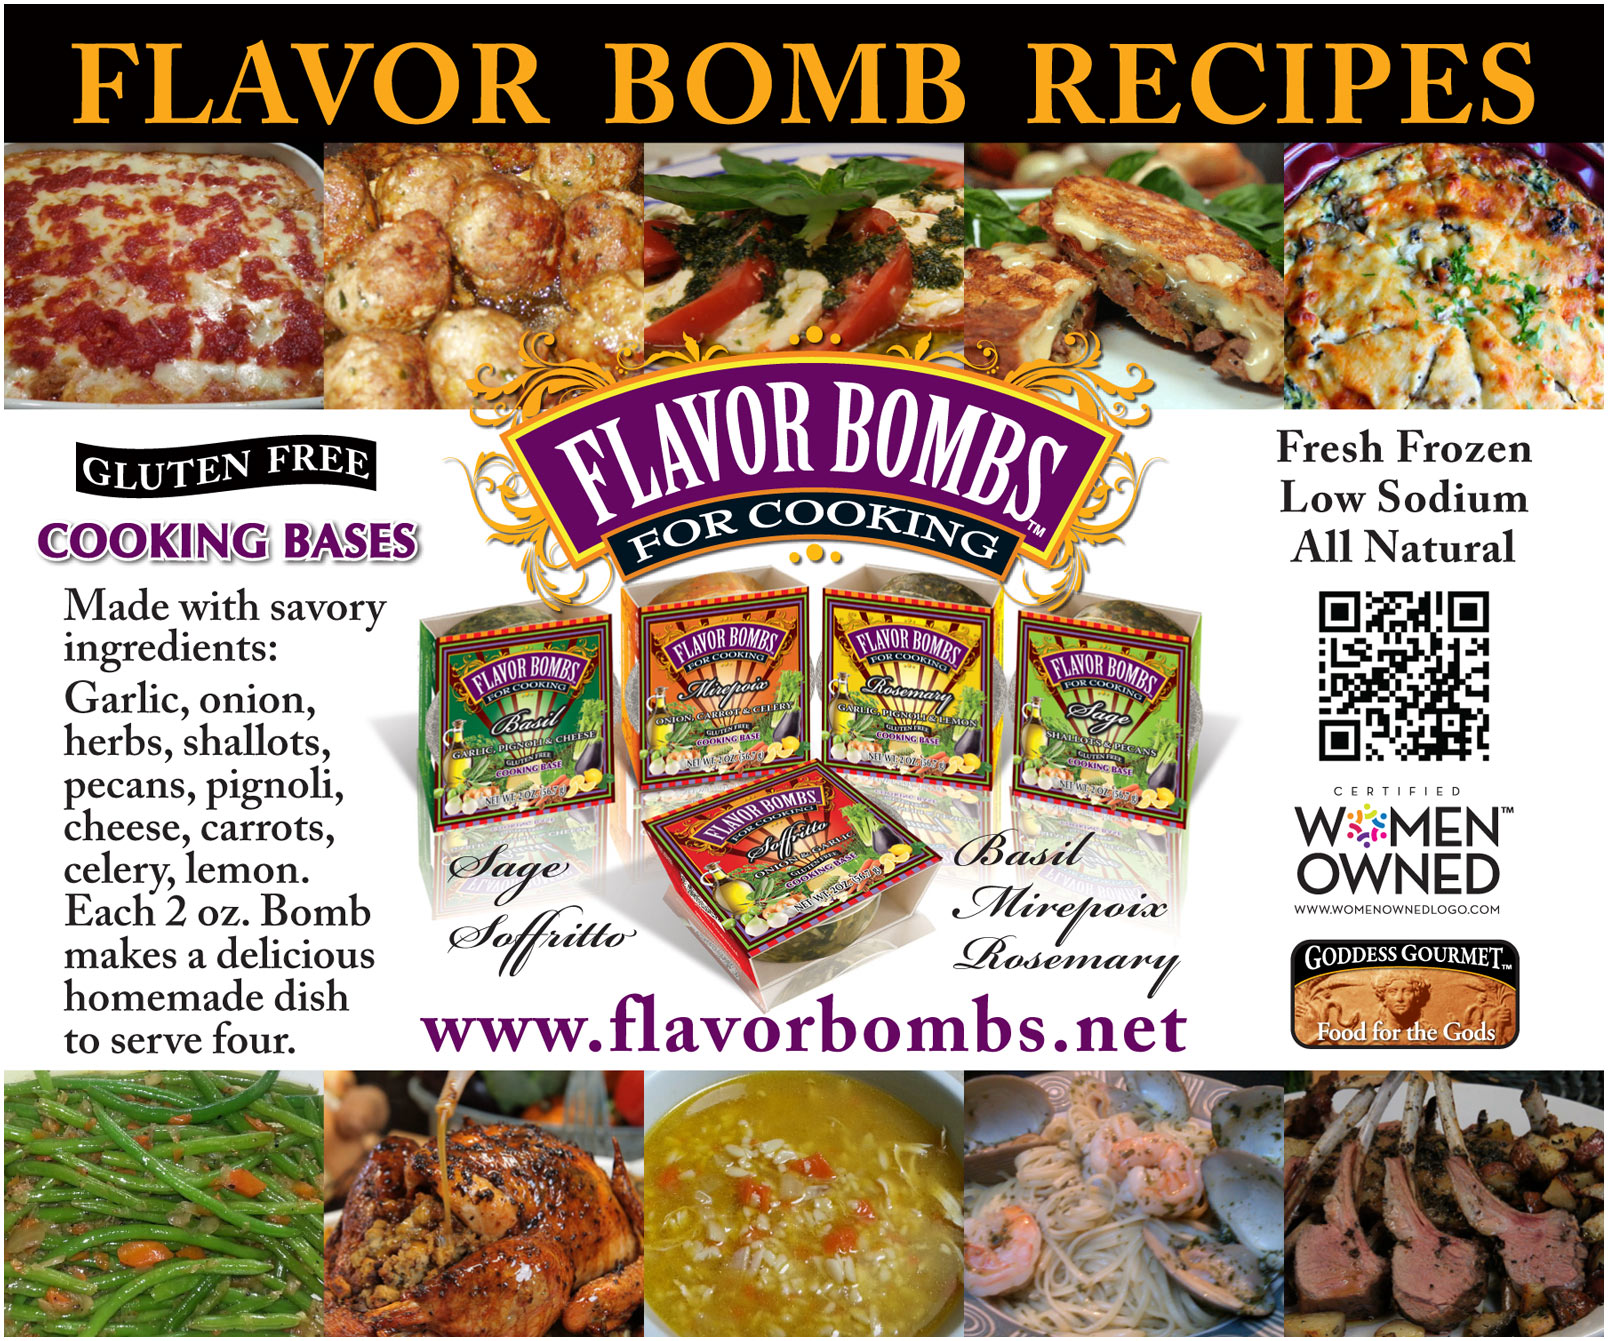 https://www.flavorbombs.net/images/flavor_bombs_homepage.jpg